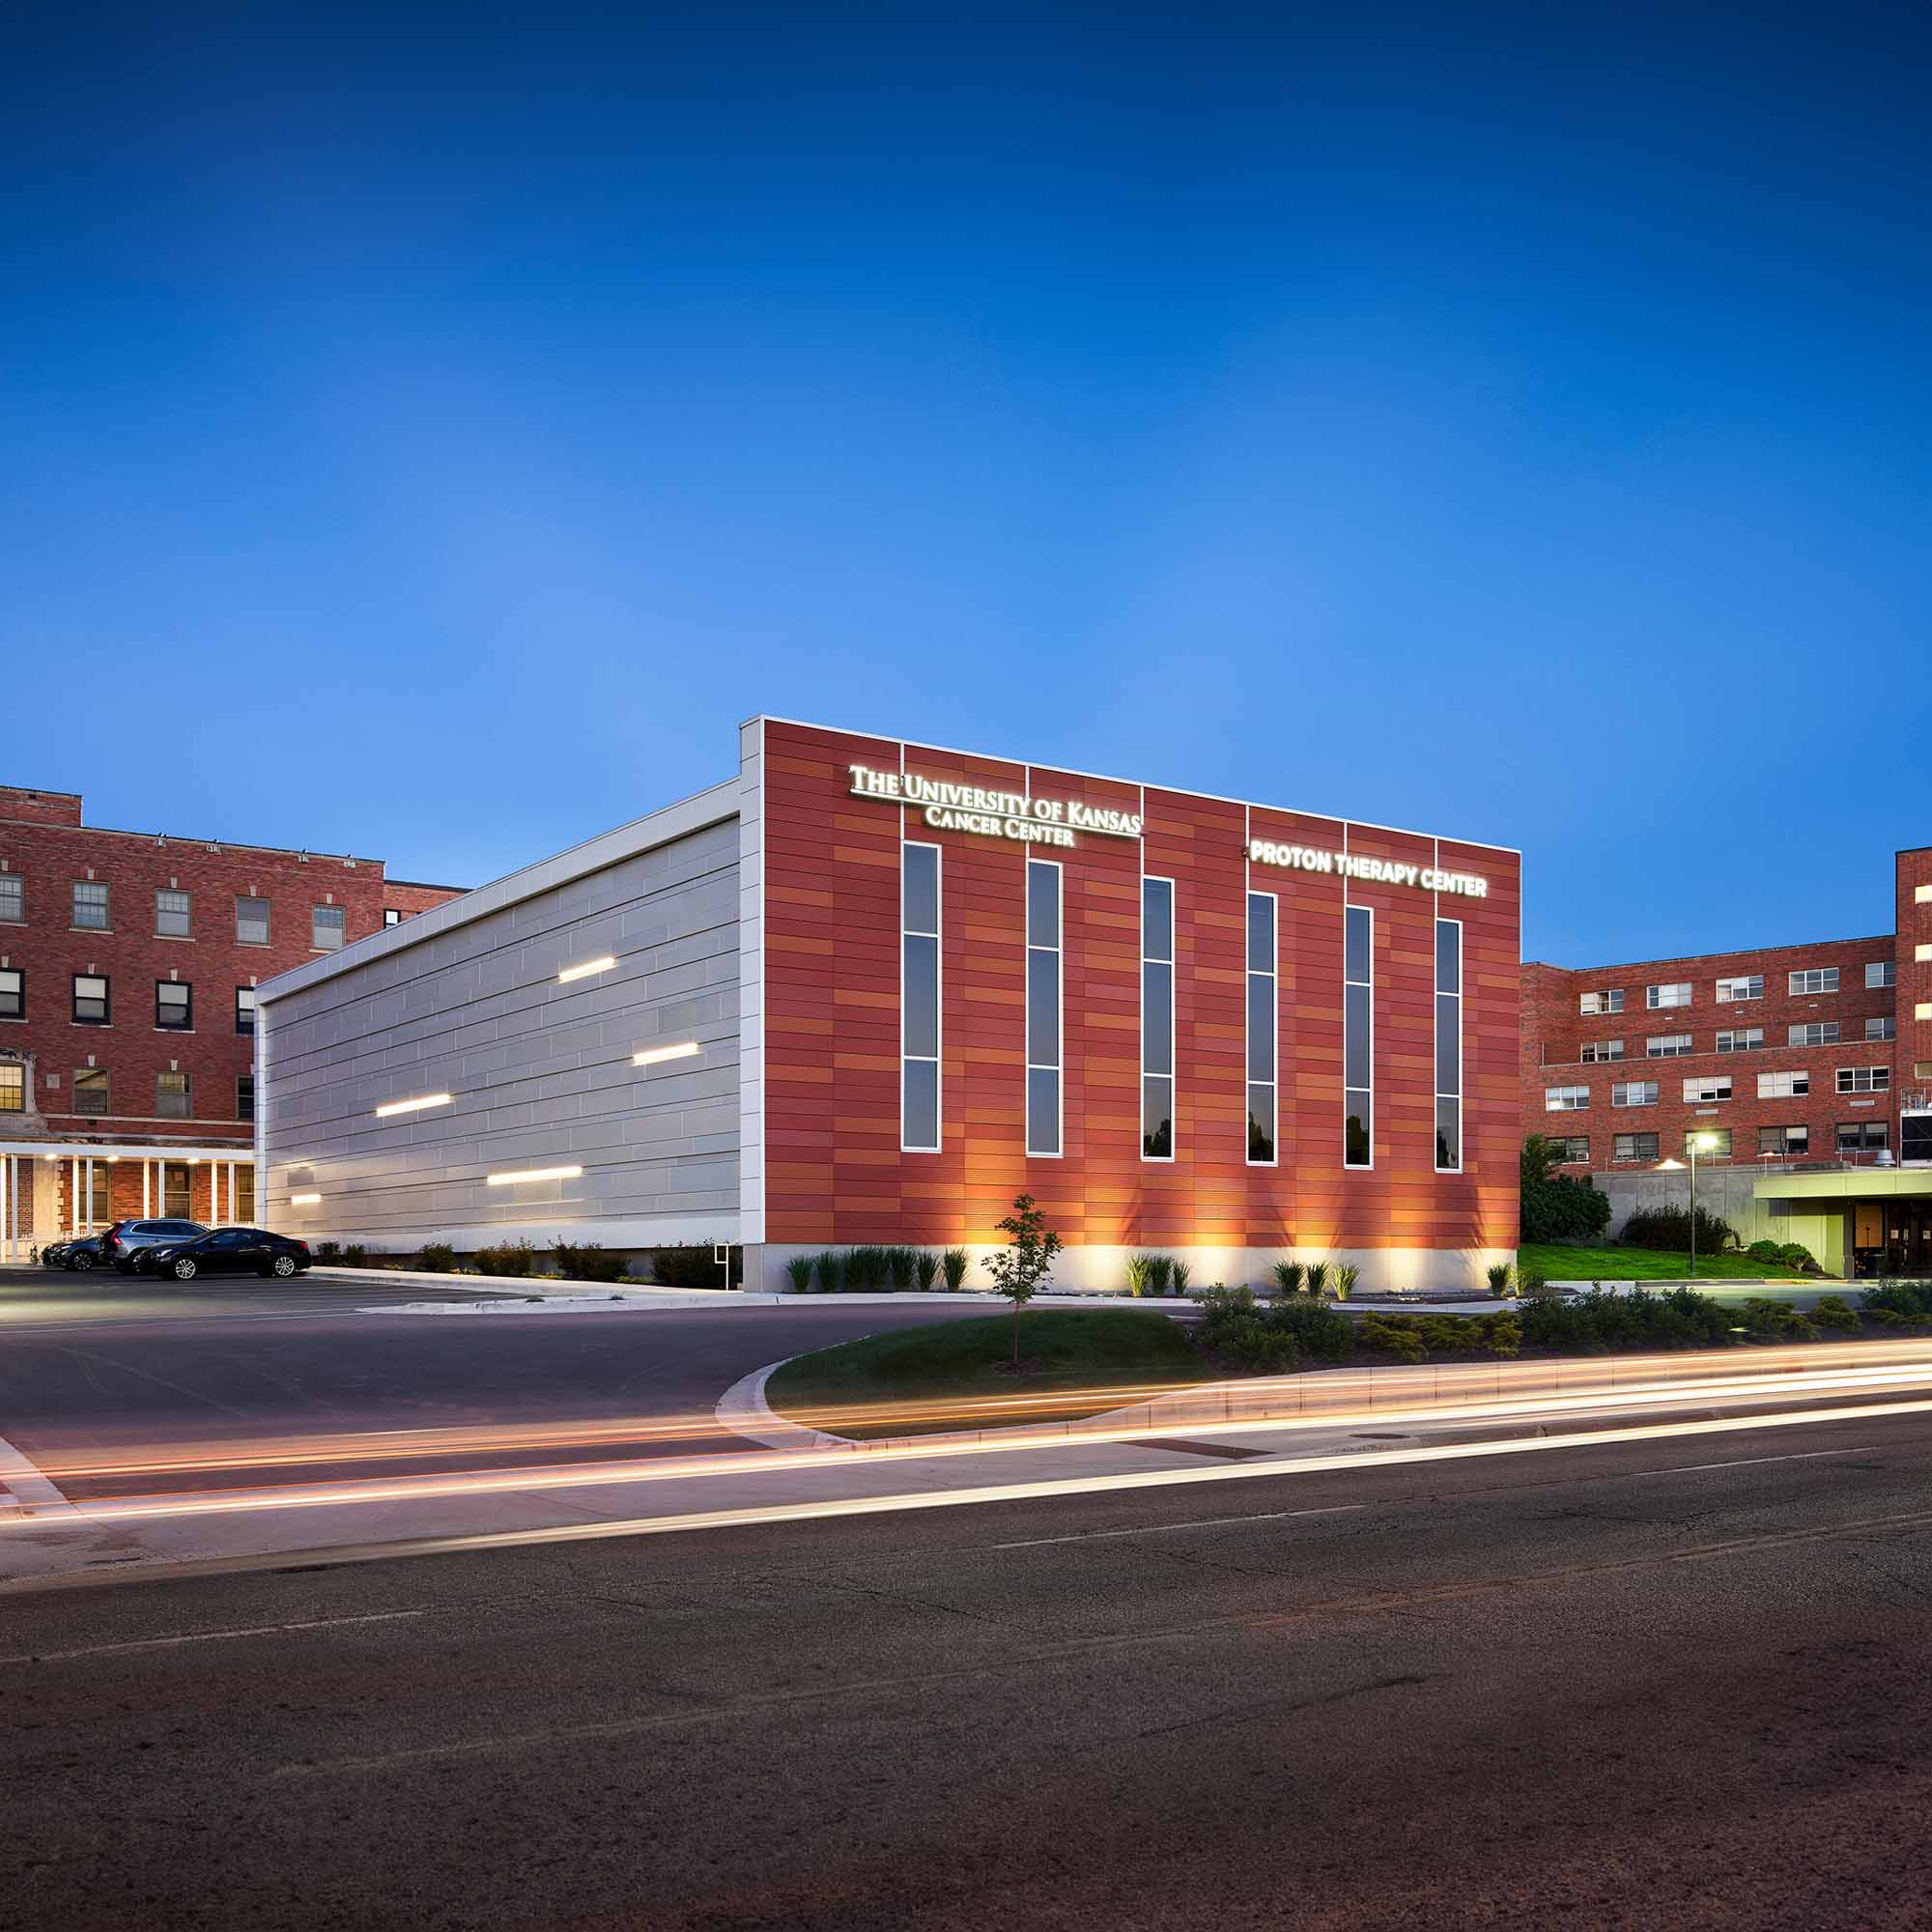 The University of Kansas Health System Proton Therapy Center